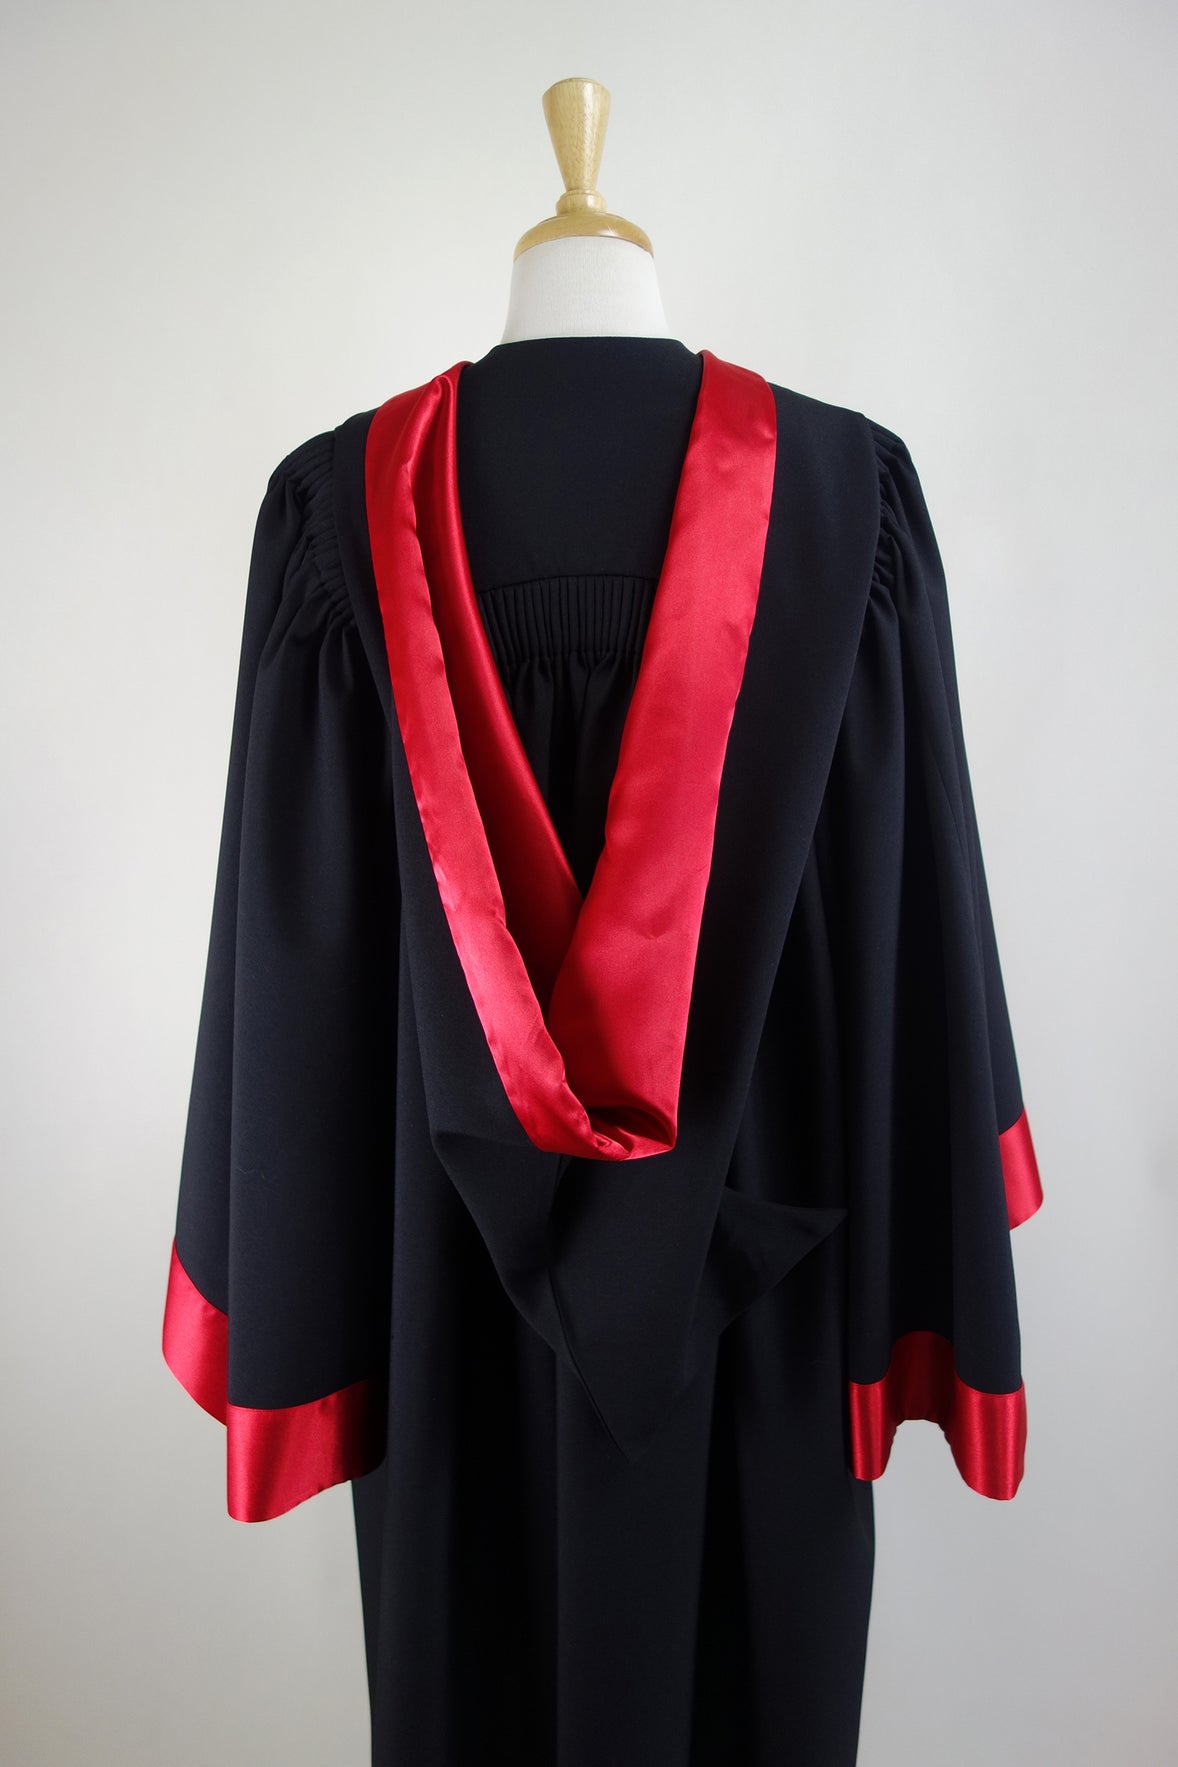 University of Divinity PhD Graduation Hood